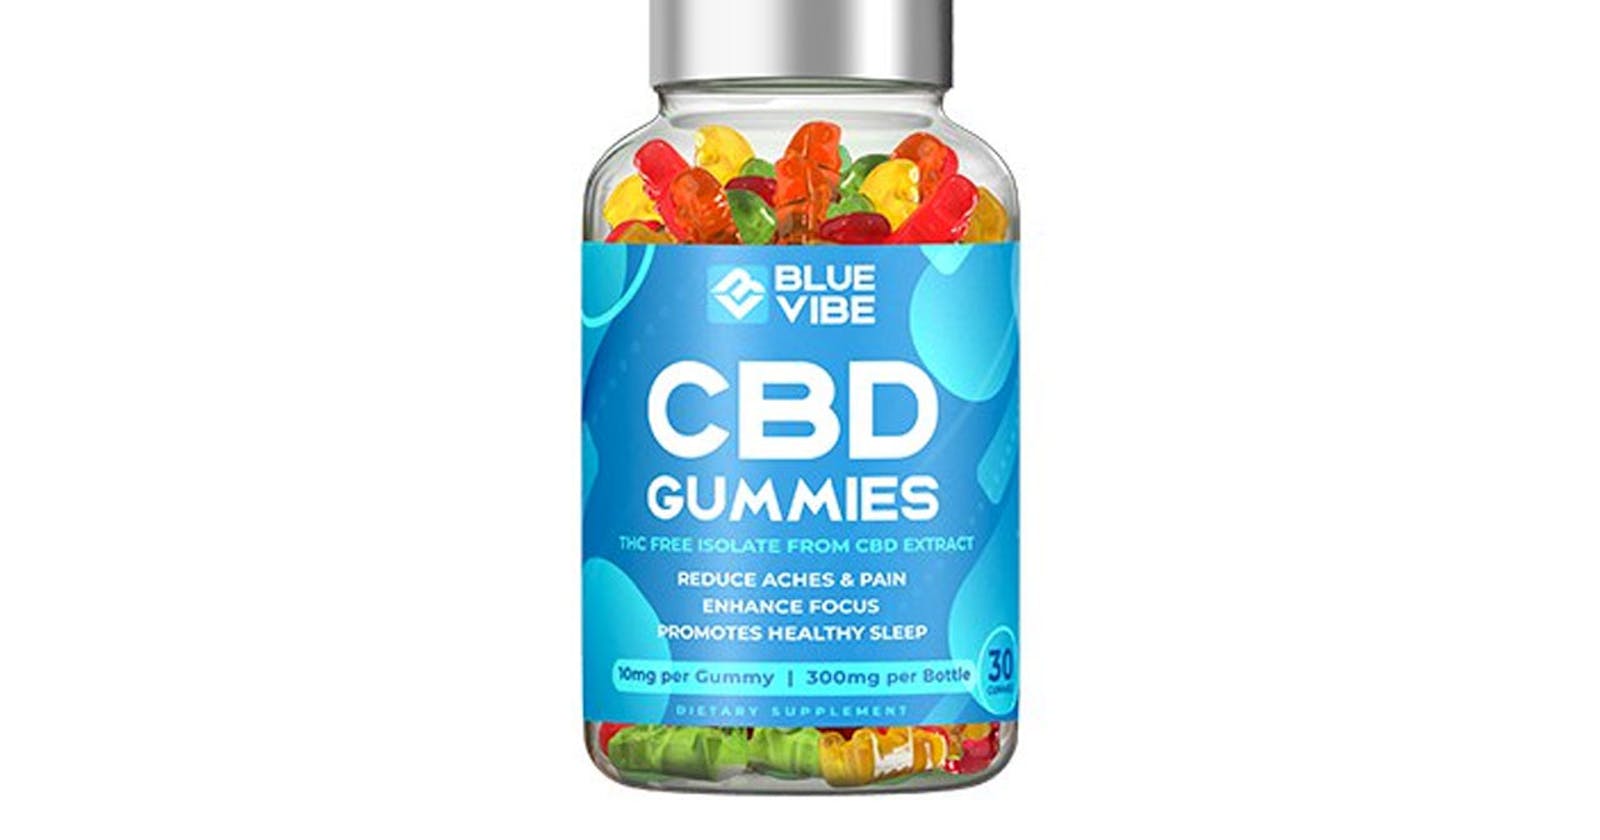 Blue Vibe CBD Gummies Price & Benefits